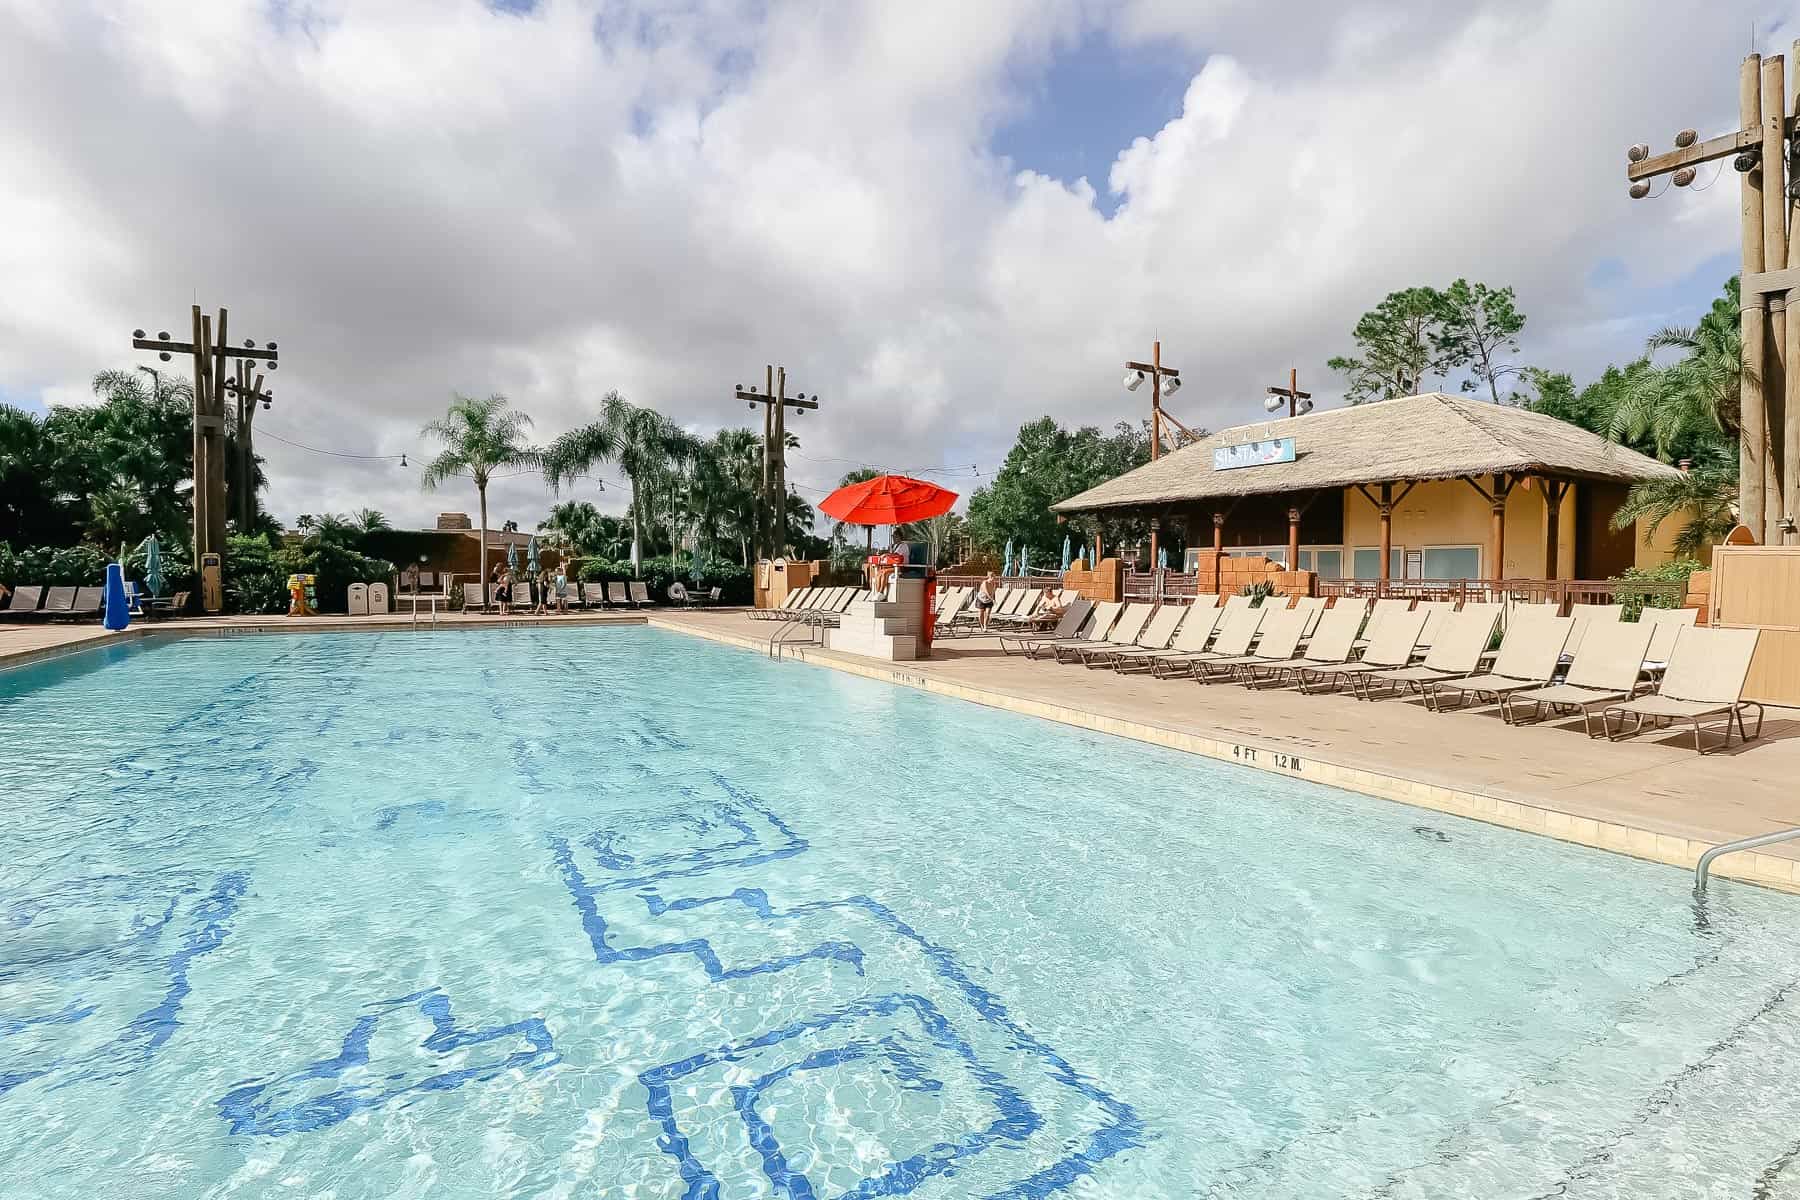 Pool area at Disney's Coronado Springs 